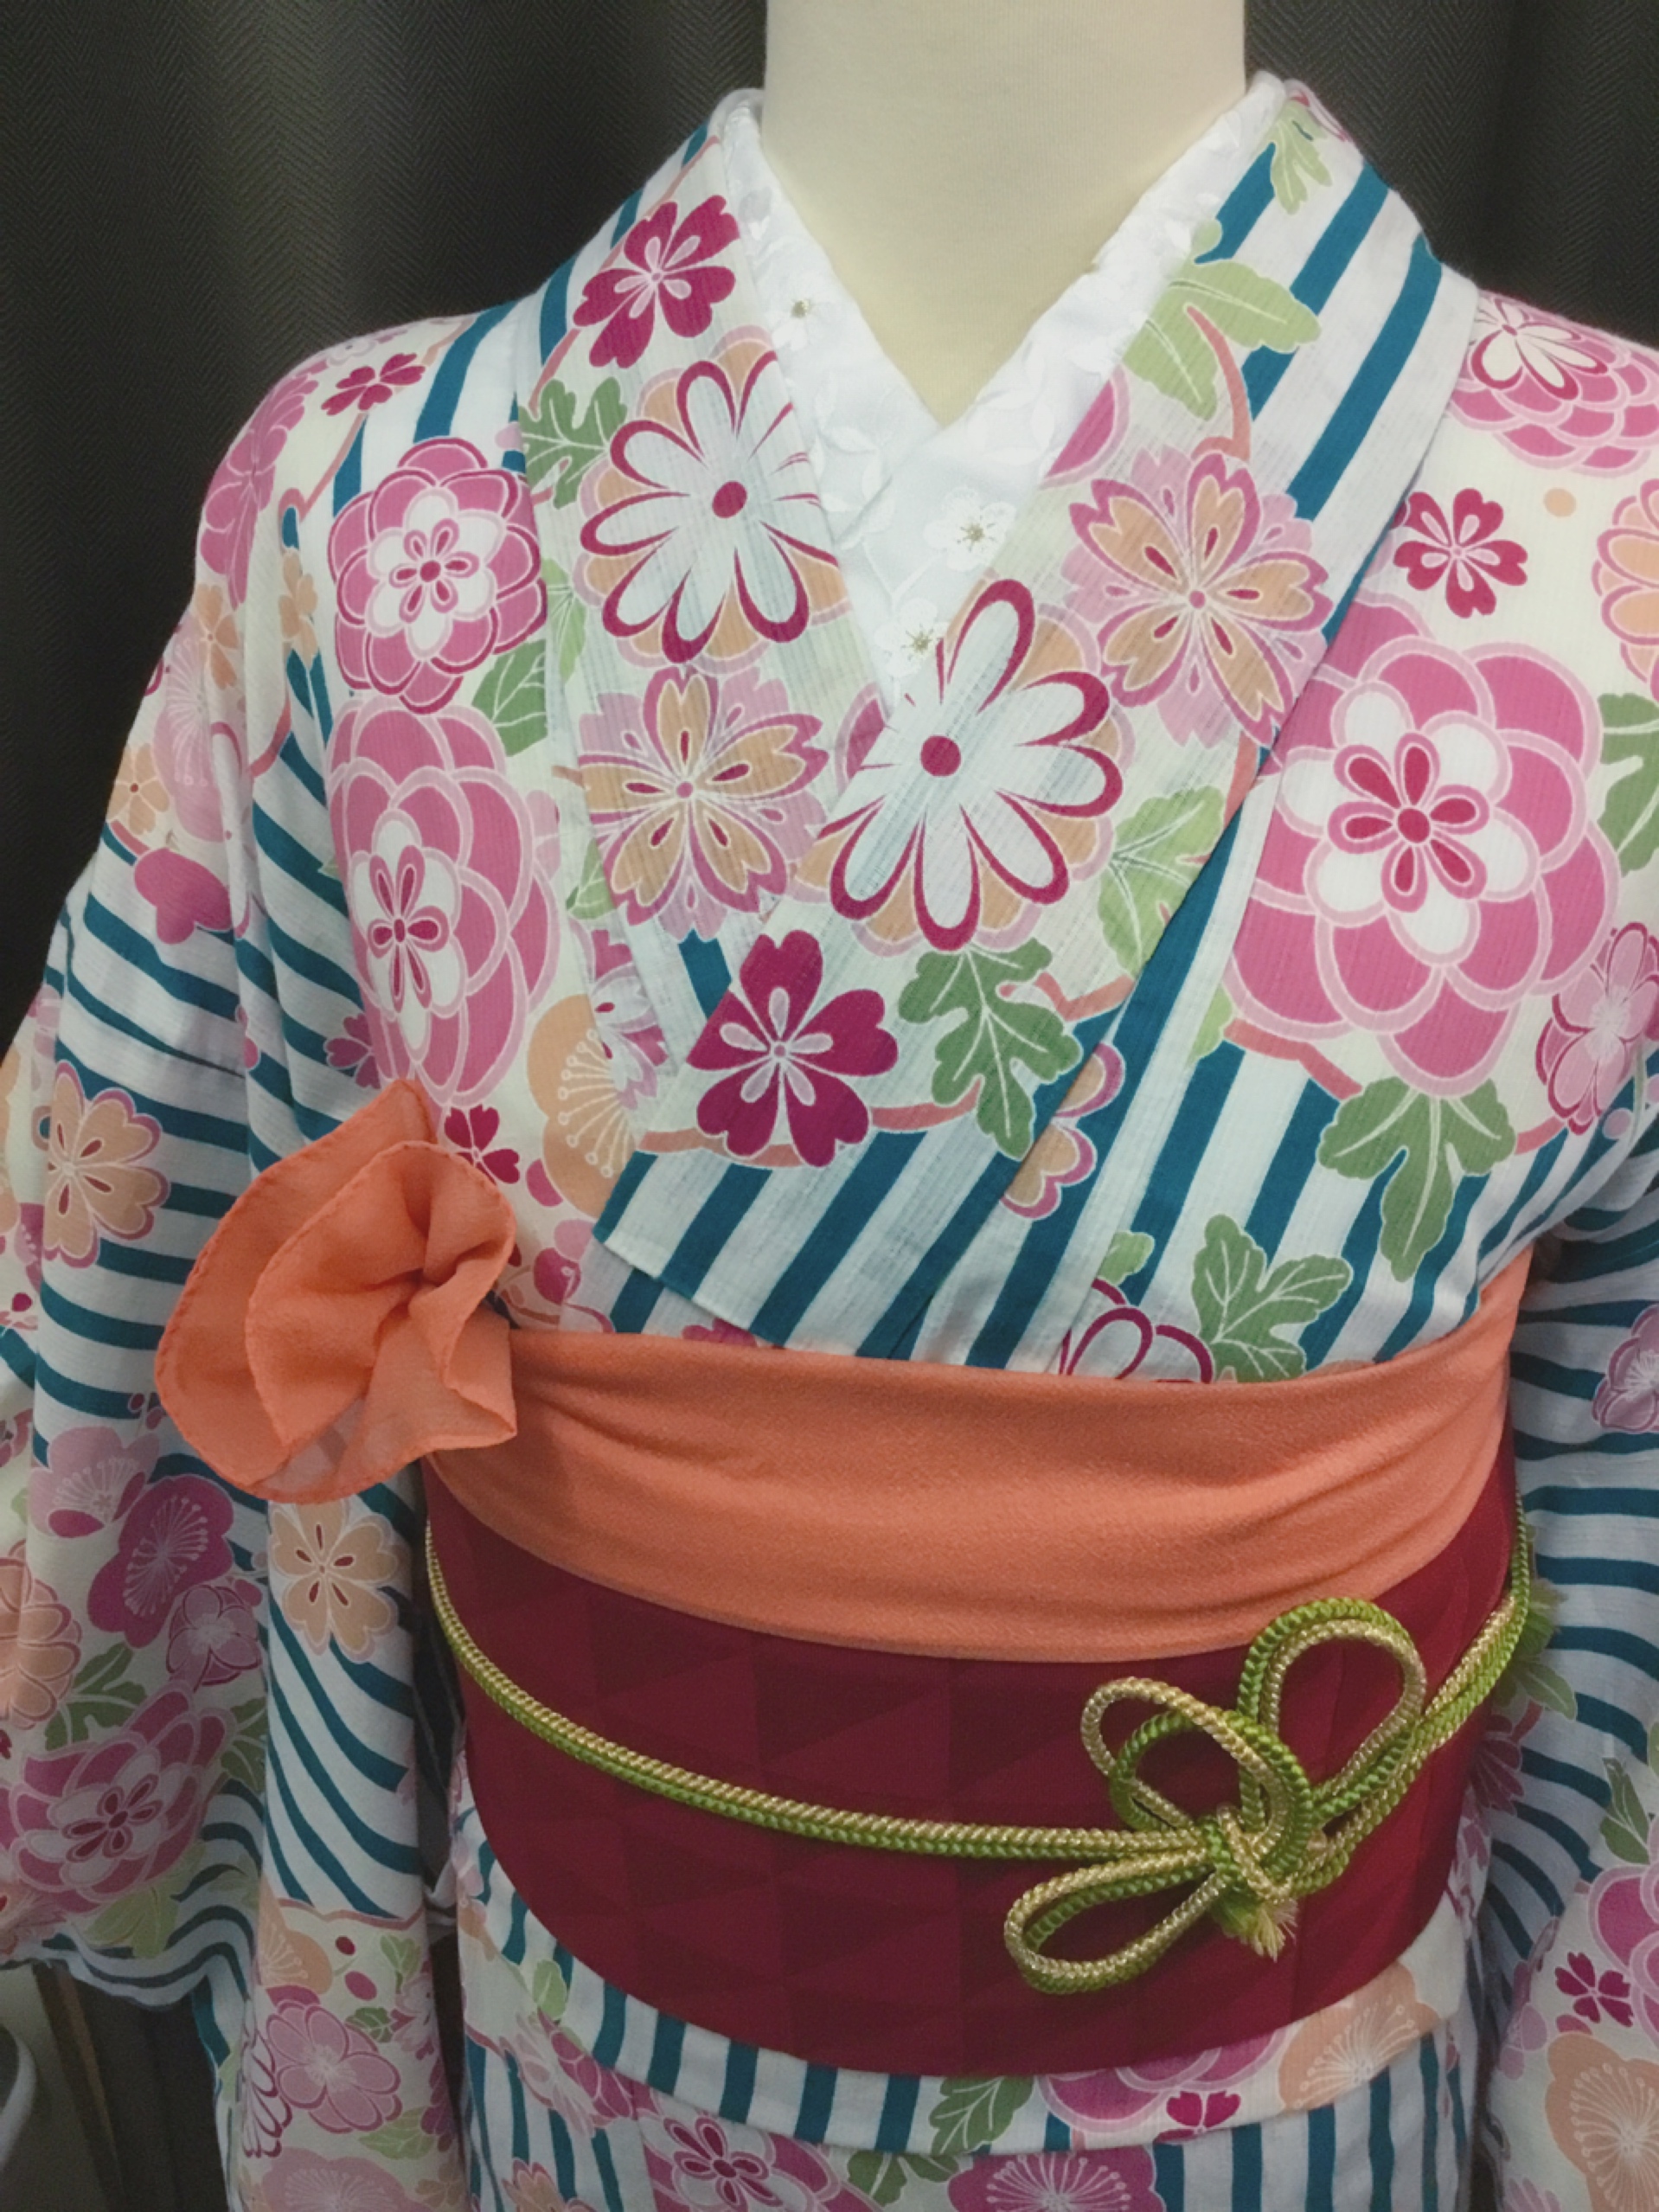 Shop Topics 可愛い帯結び 新宿で着物 浴衣を楽しむなら 着物レンタルvasara